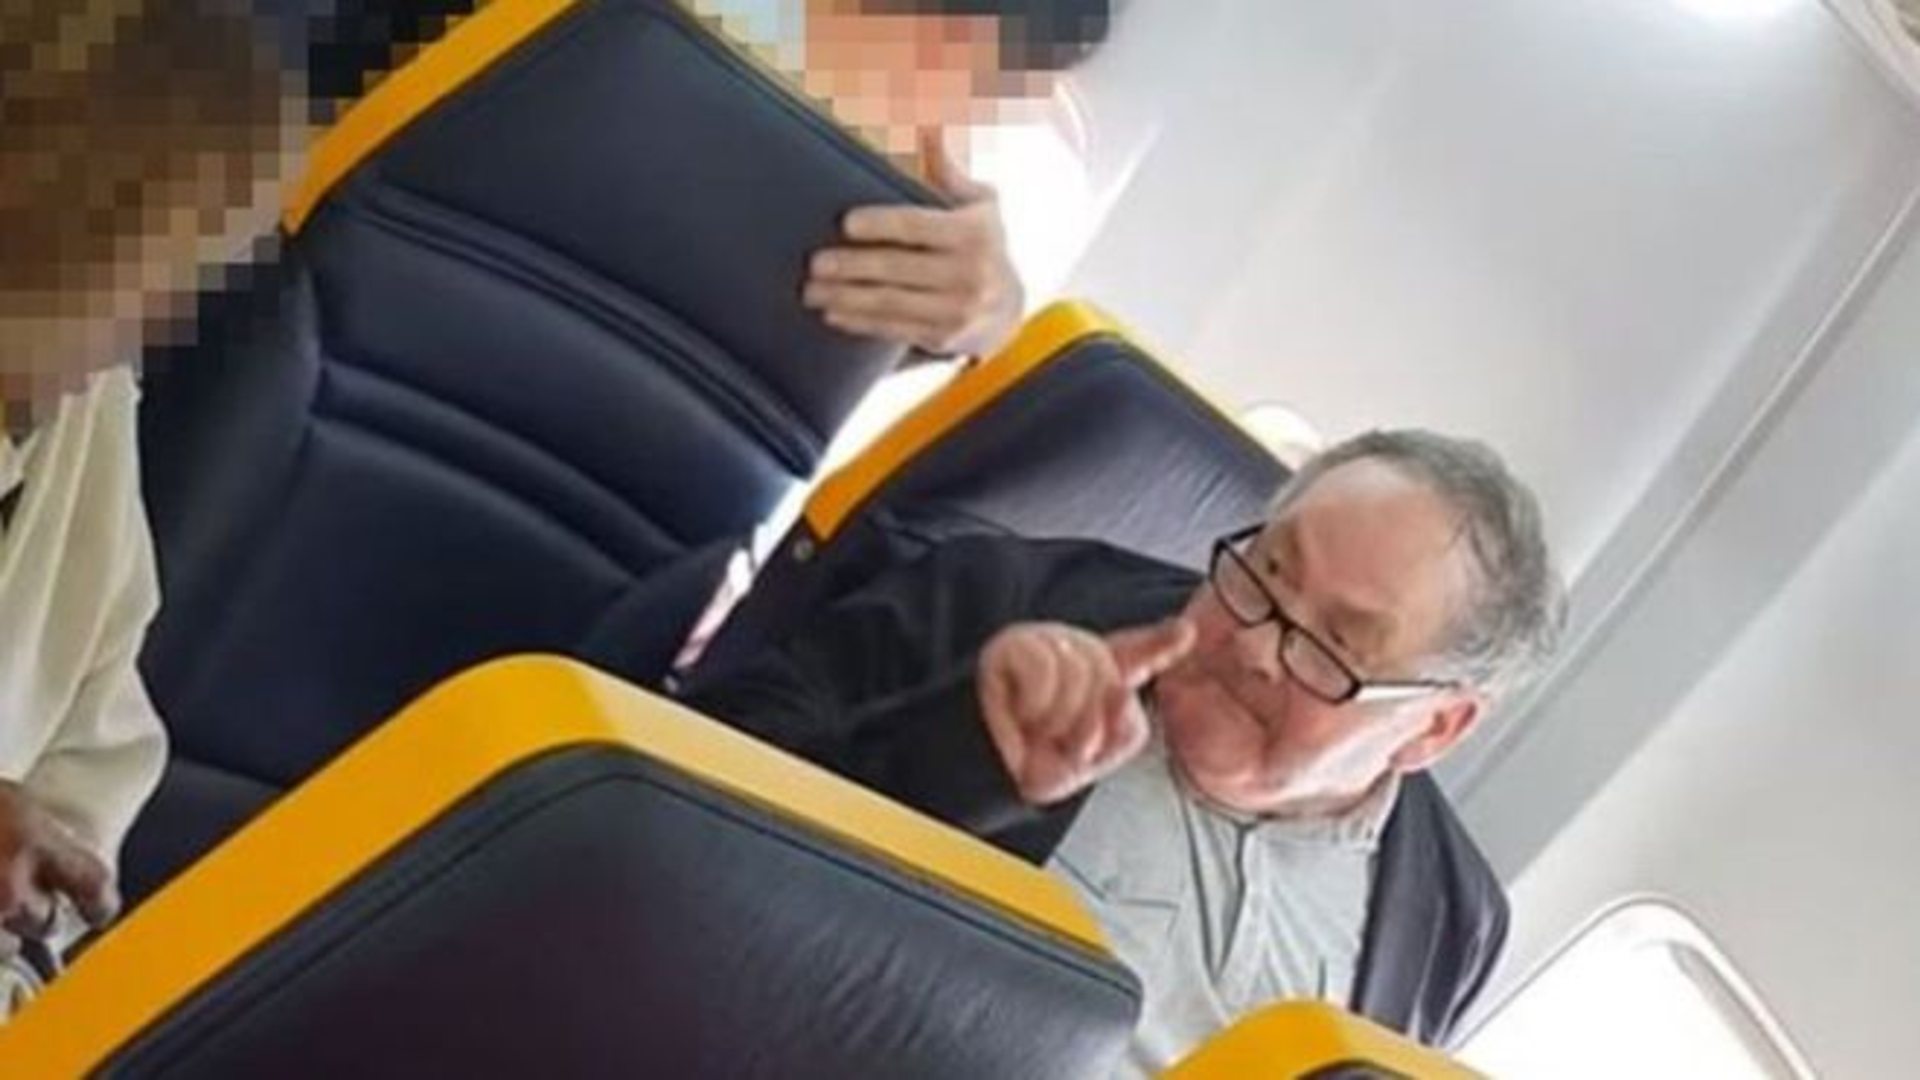 Ryanair passanger spouts racist abuse